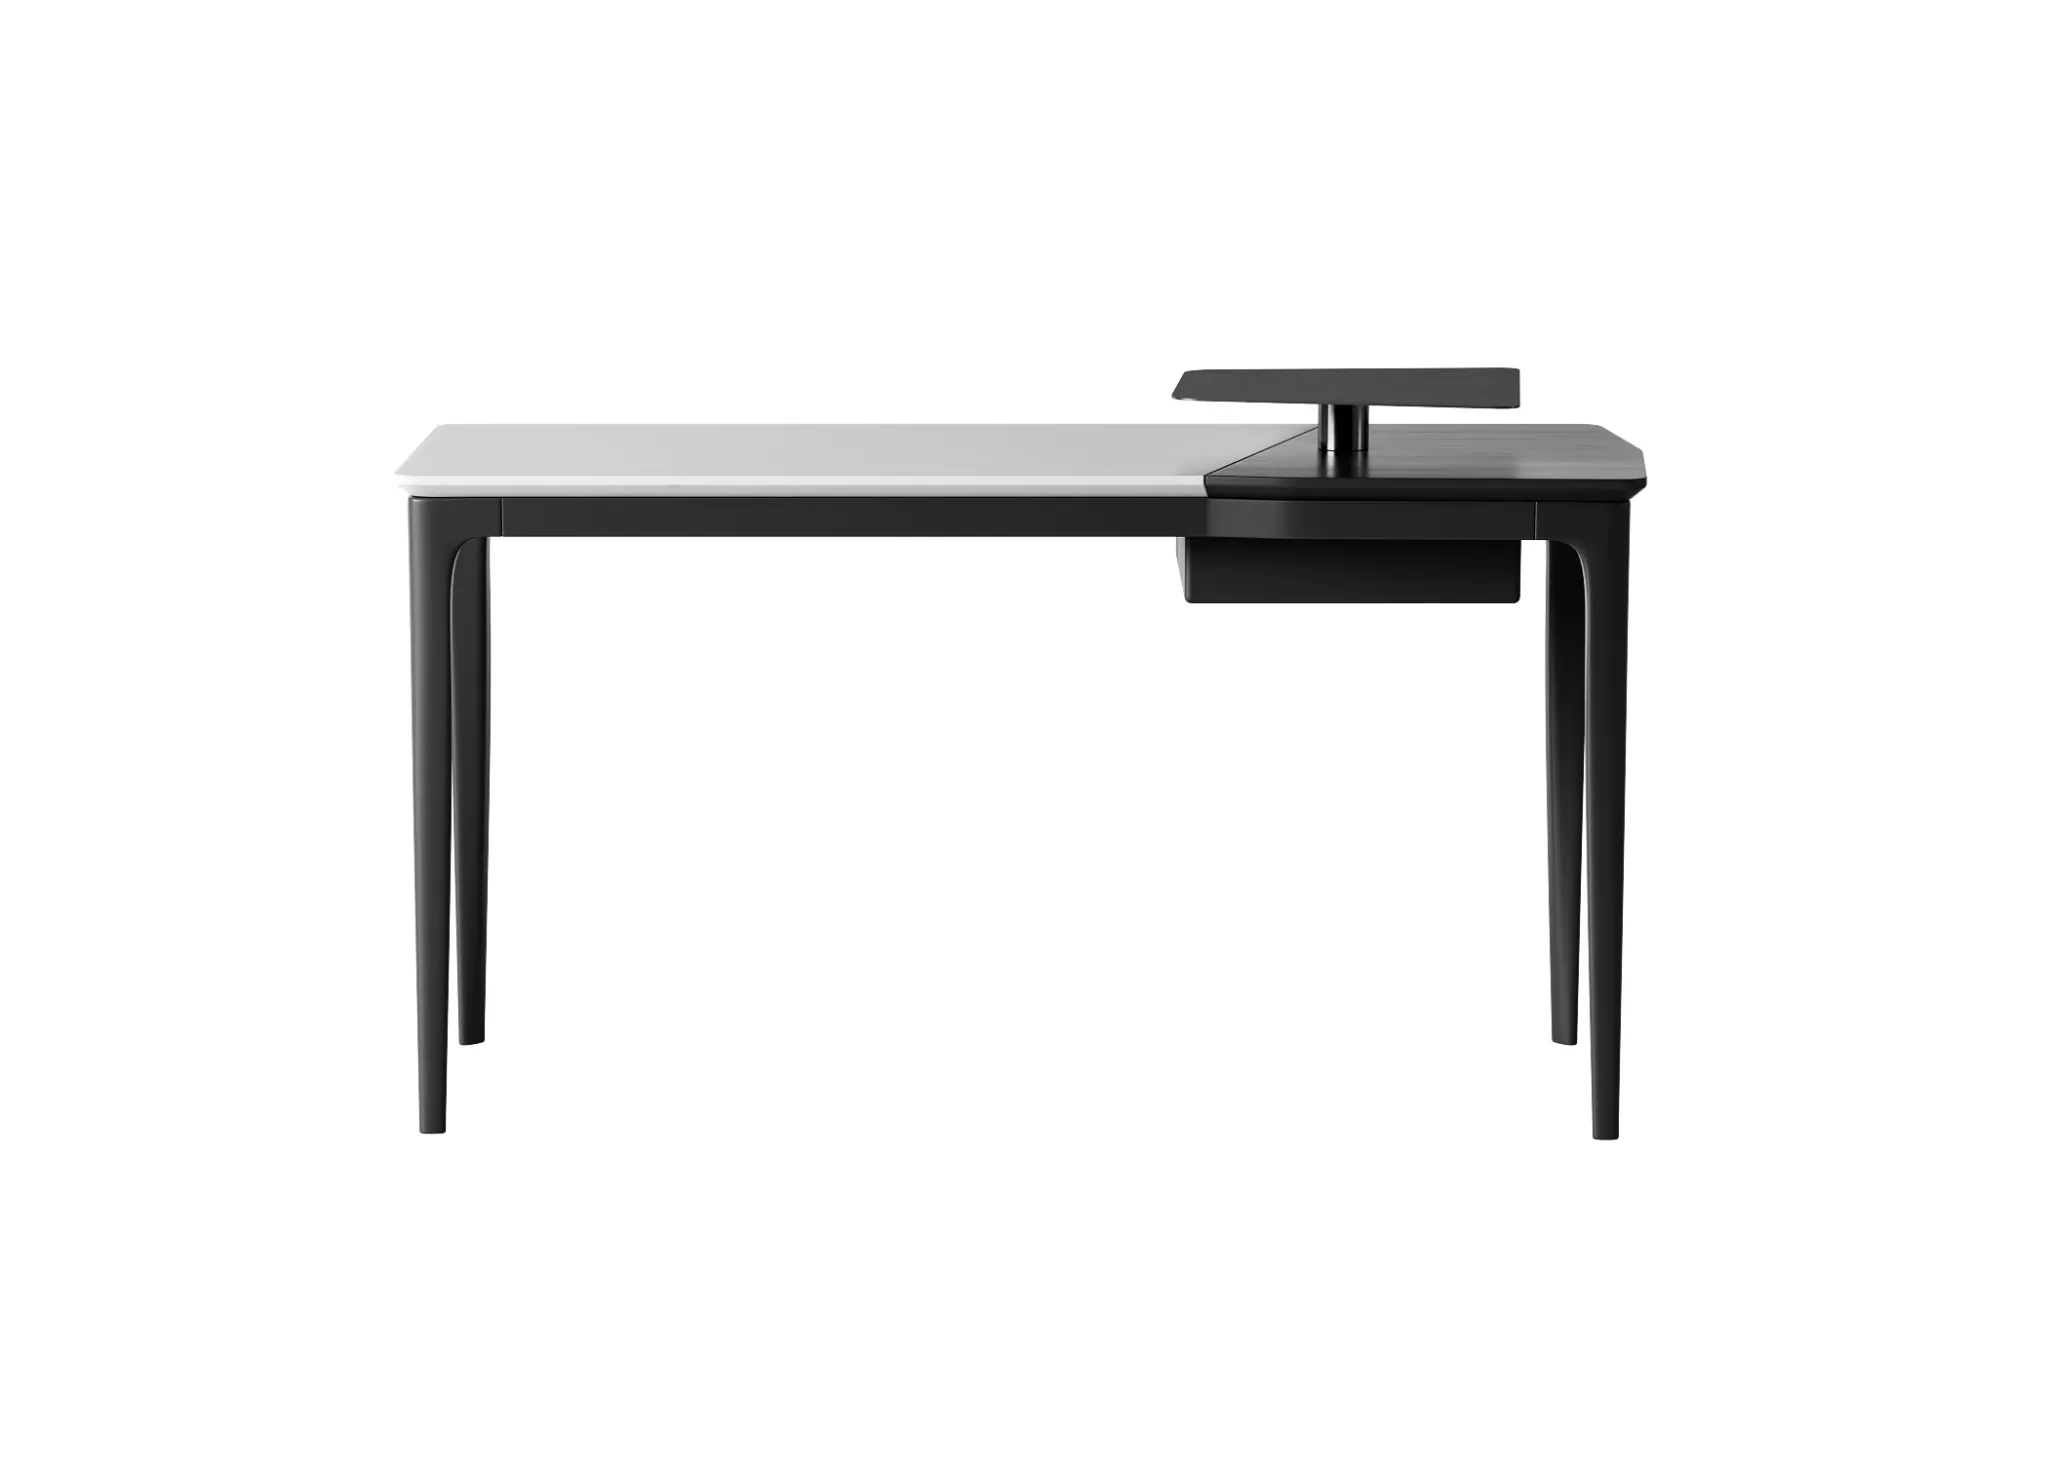 FURNITURE 3D MODELS – TABLES – 0360